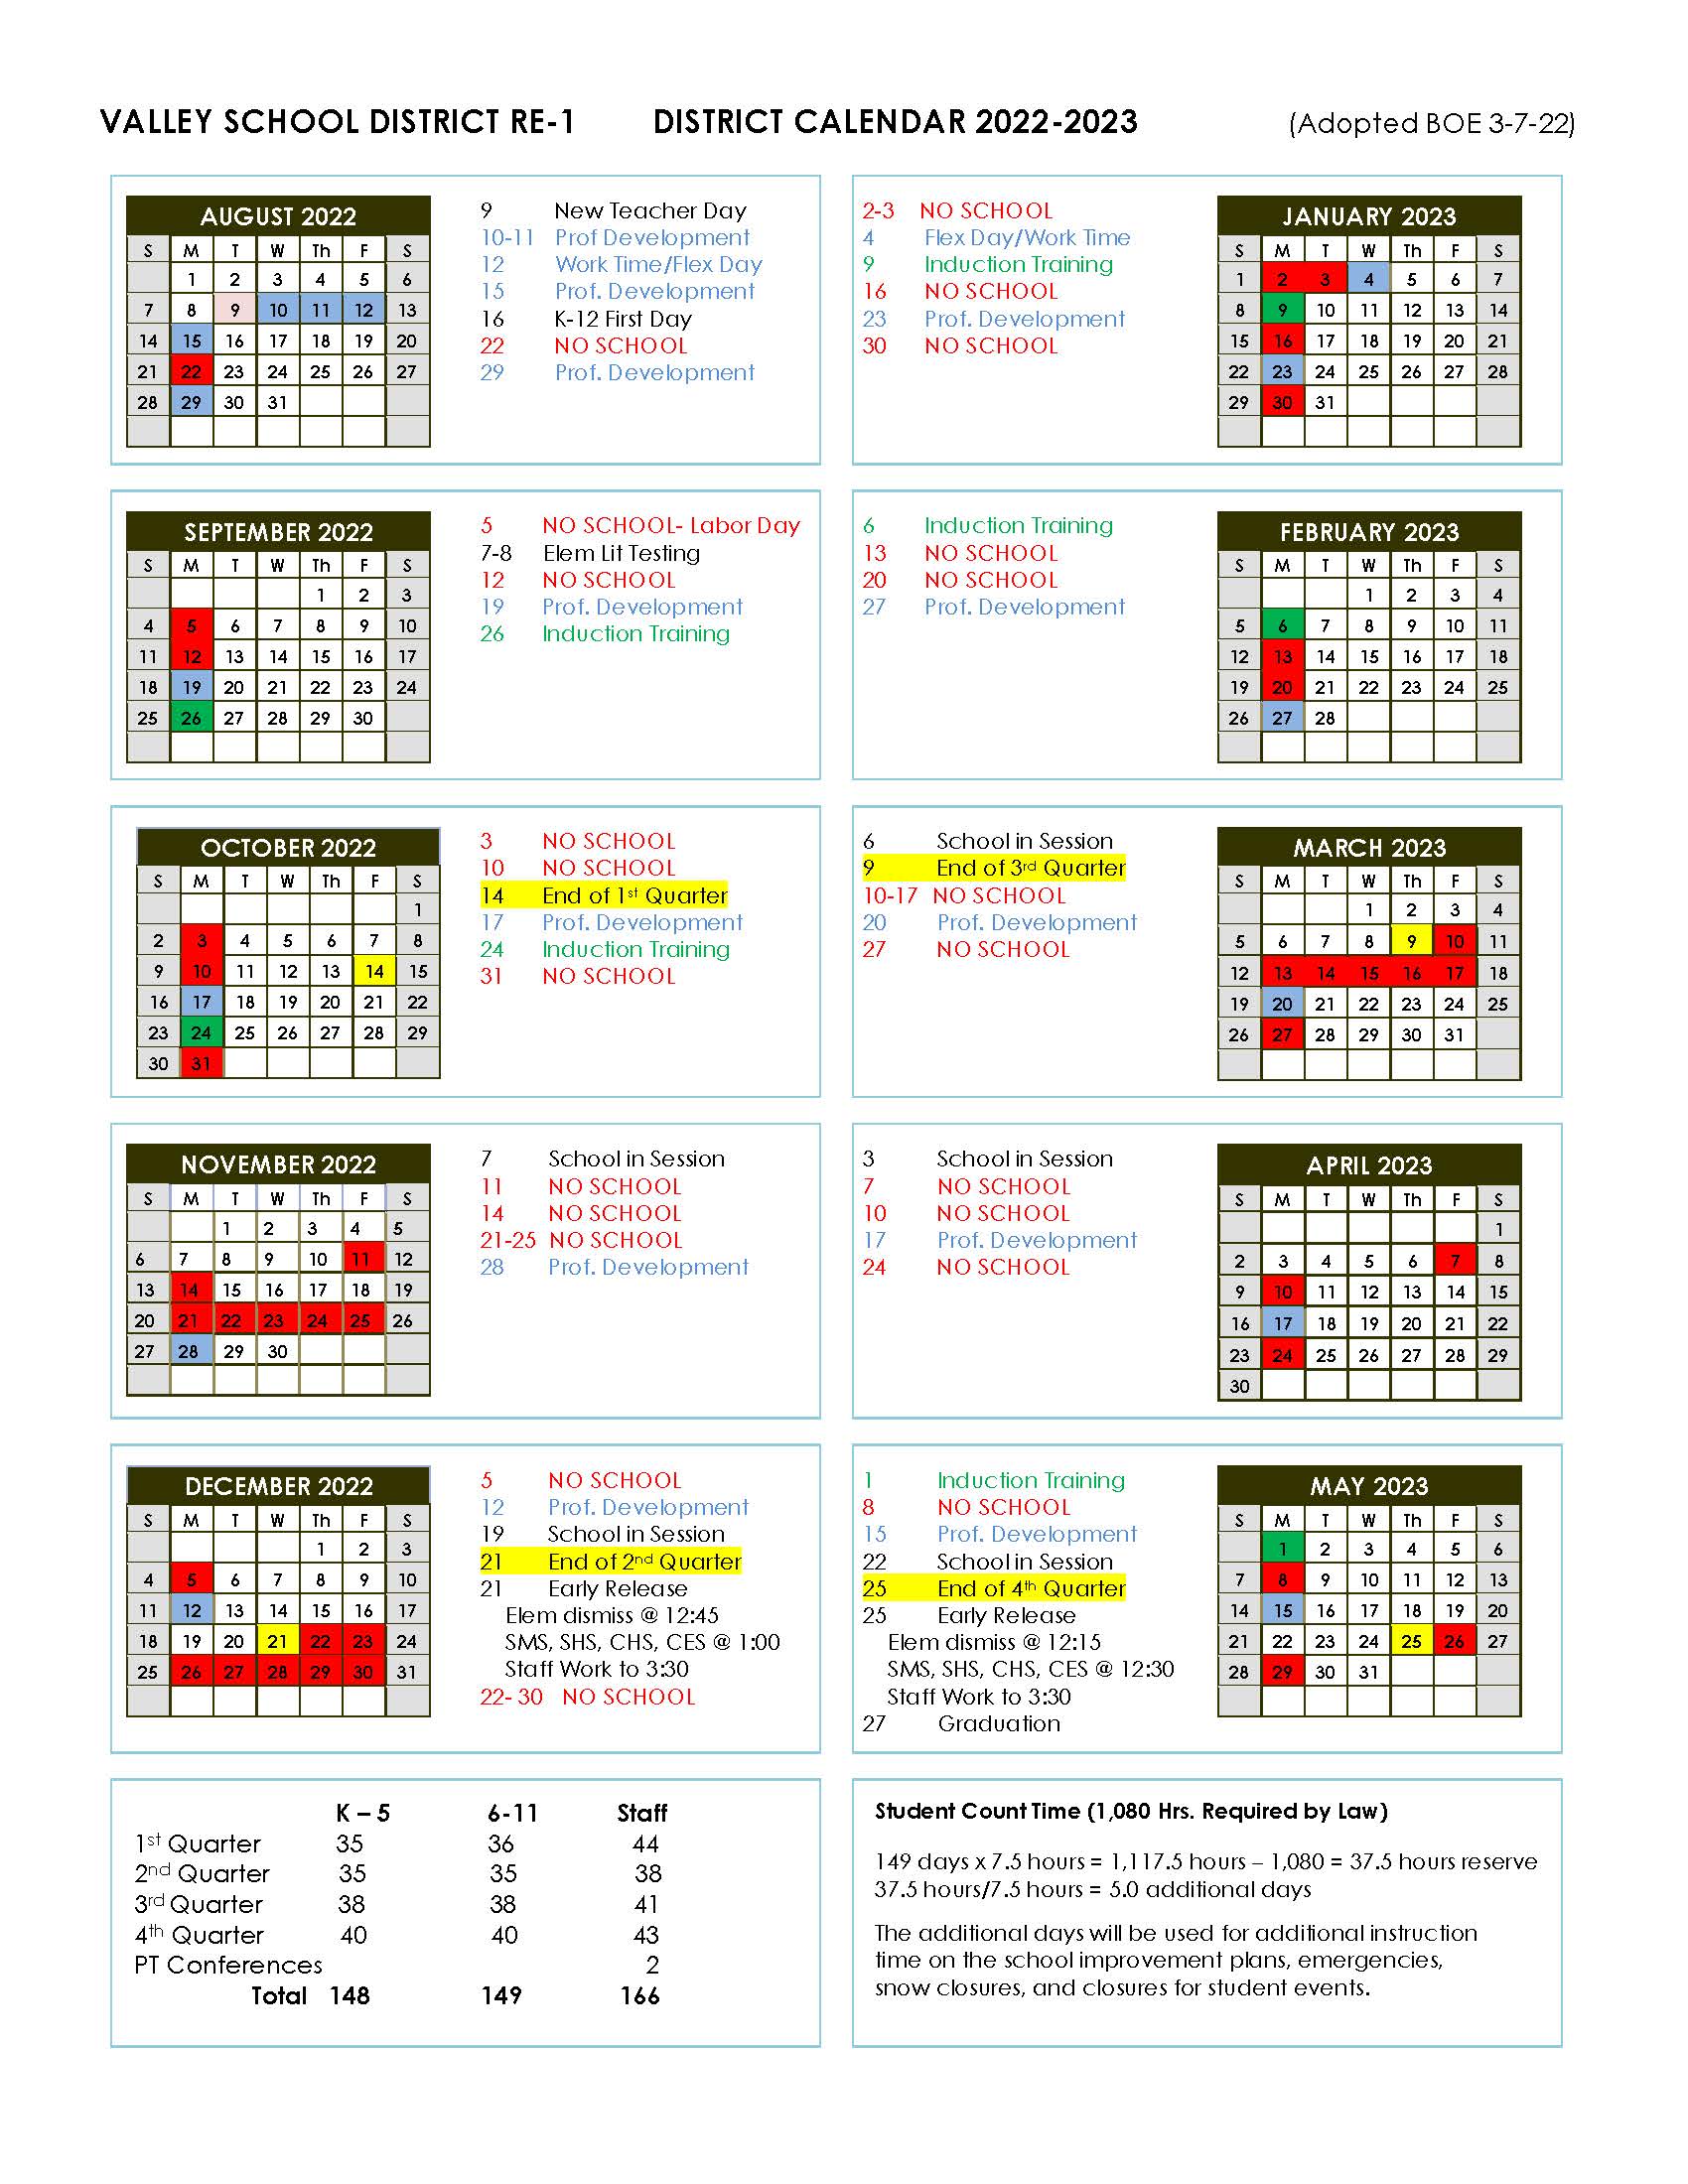 Valley School District RE 1 Calendar 2024 2025